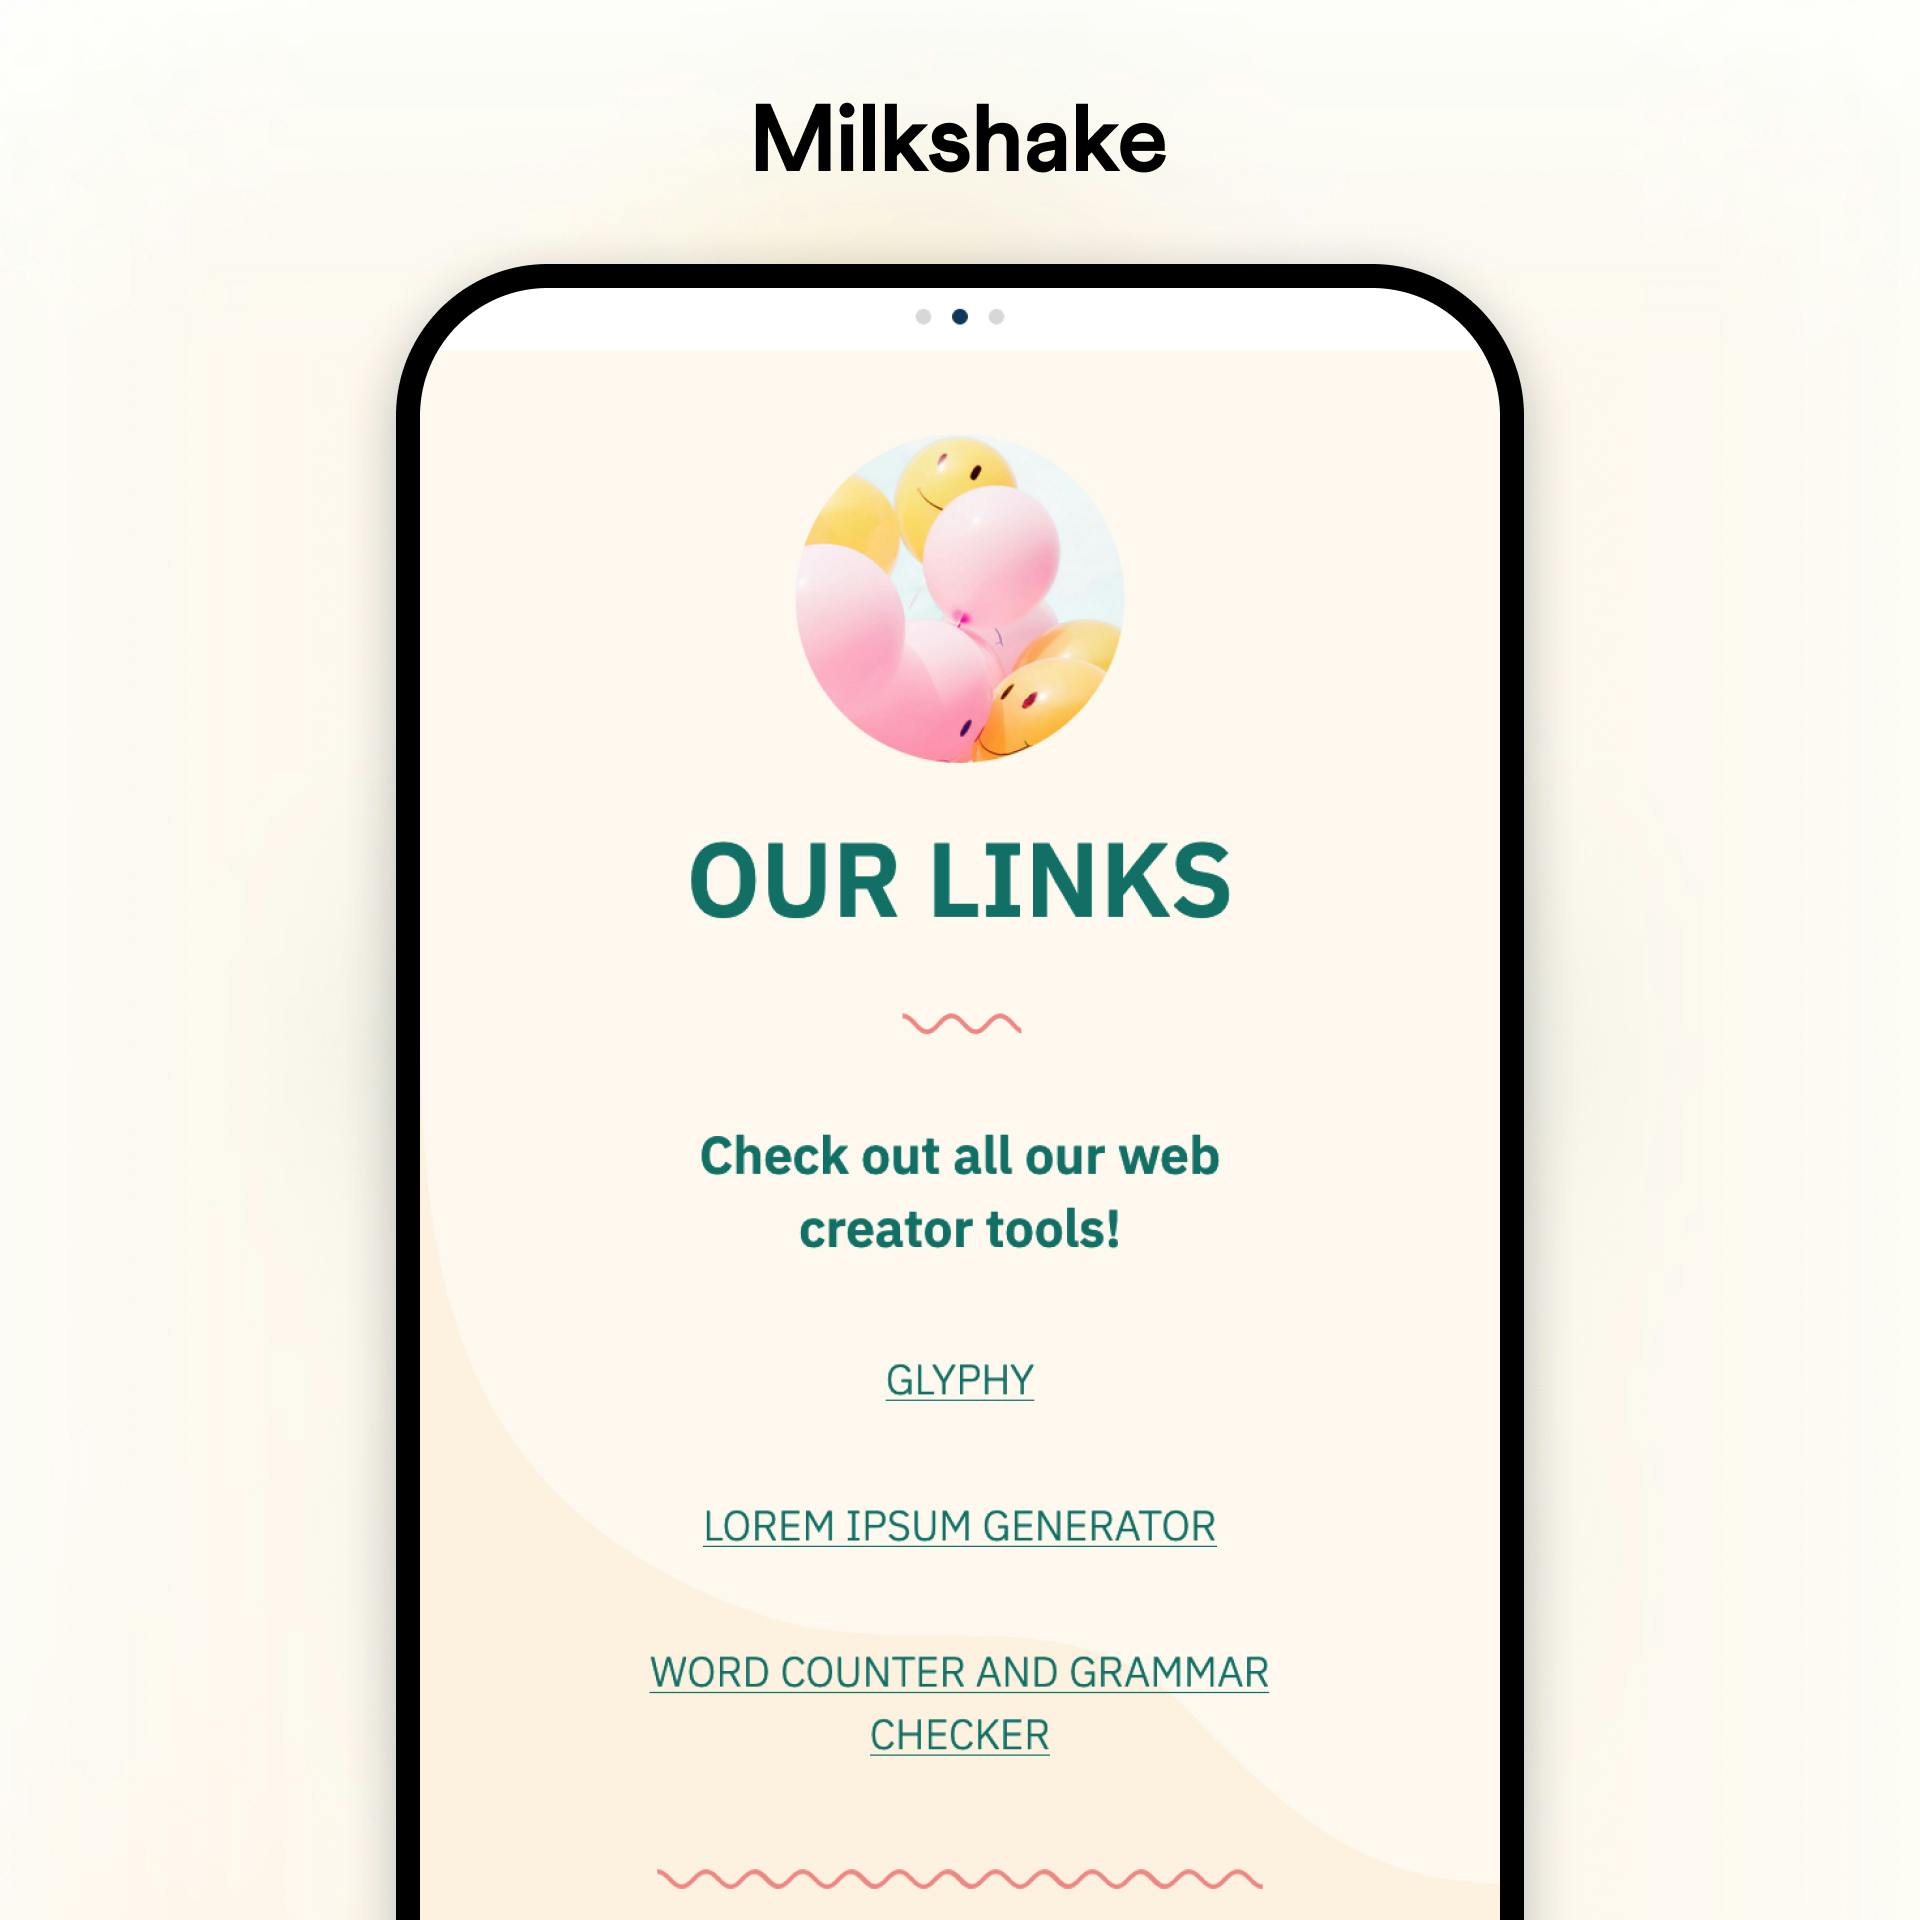 Milkshake link in bio tool example profile on a mobile device